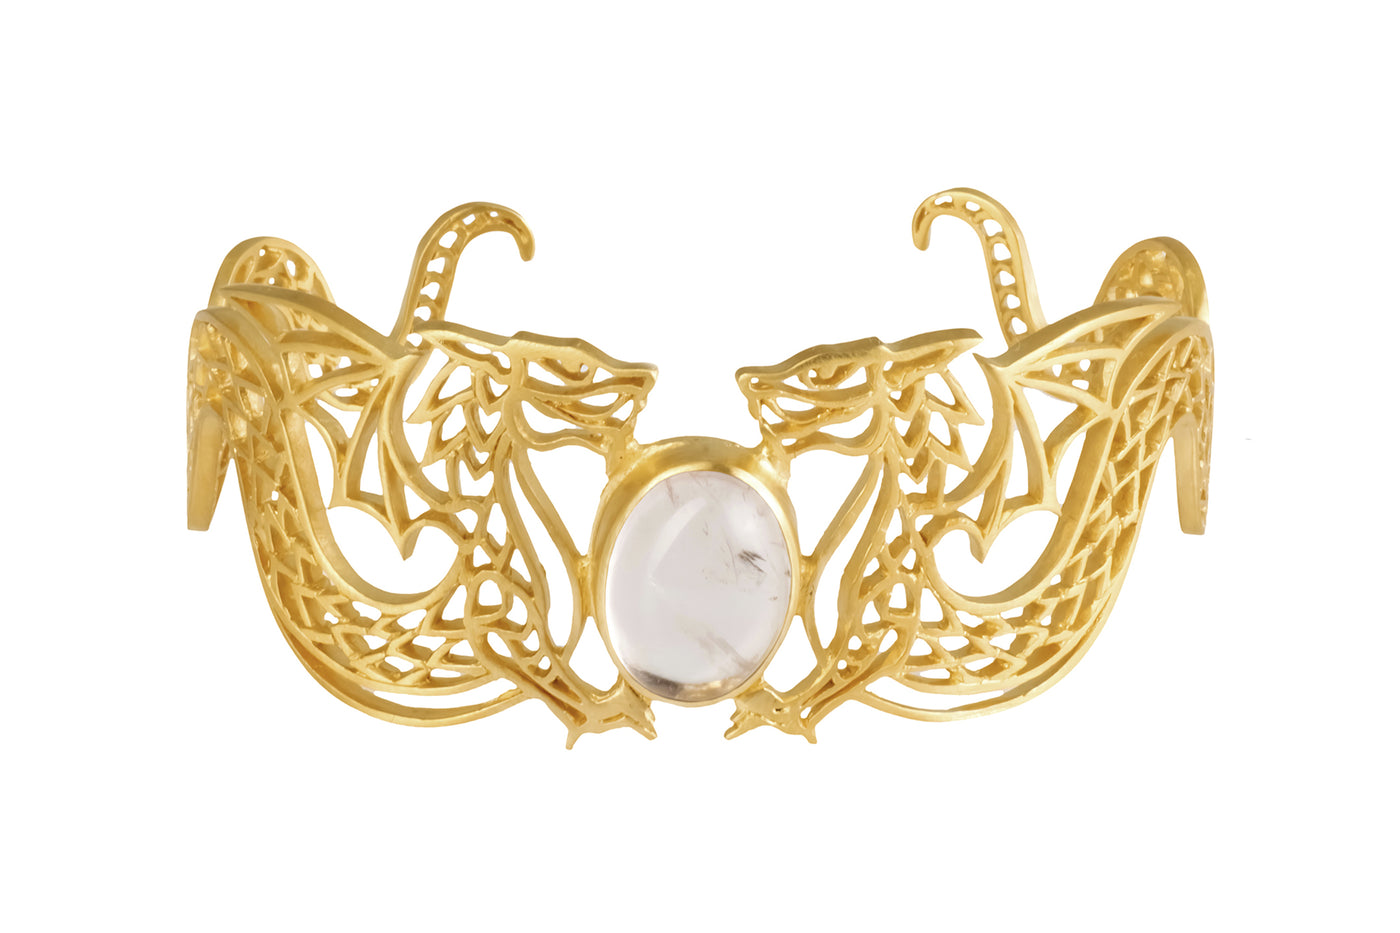 Dragons bracelet with rose quartz. Silver, gold-plated